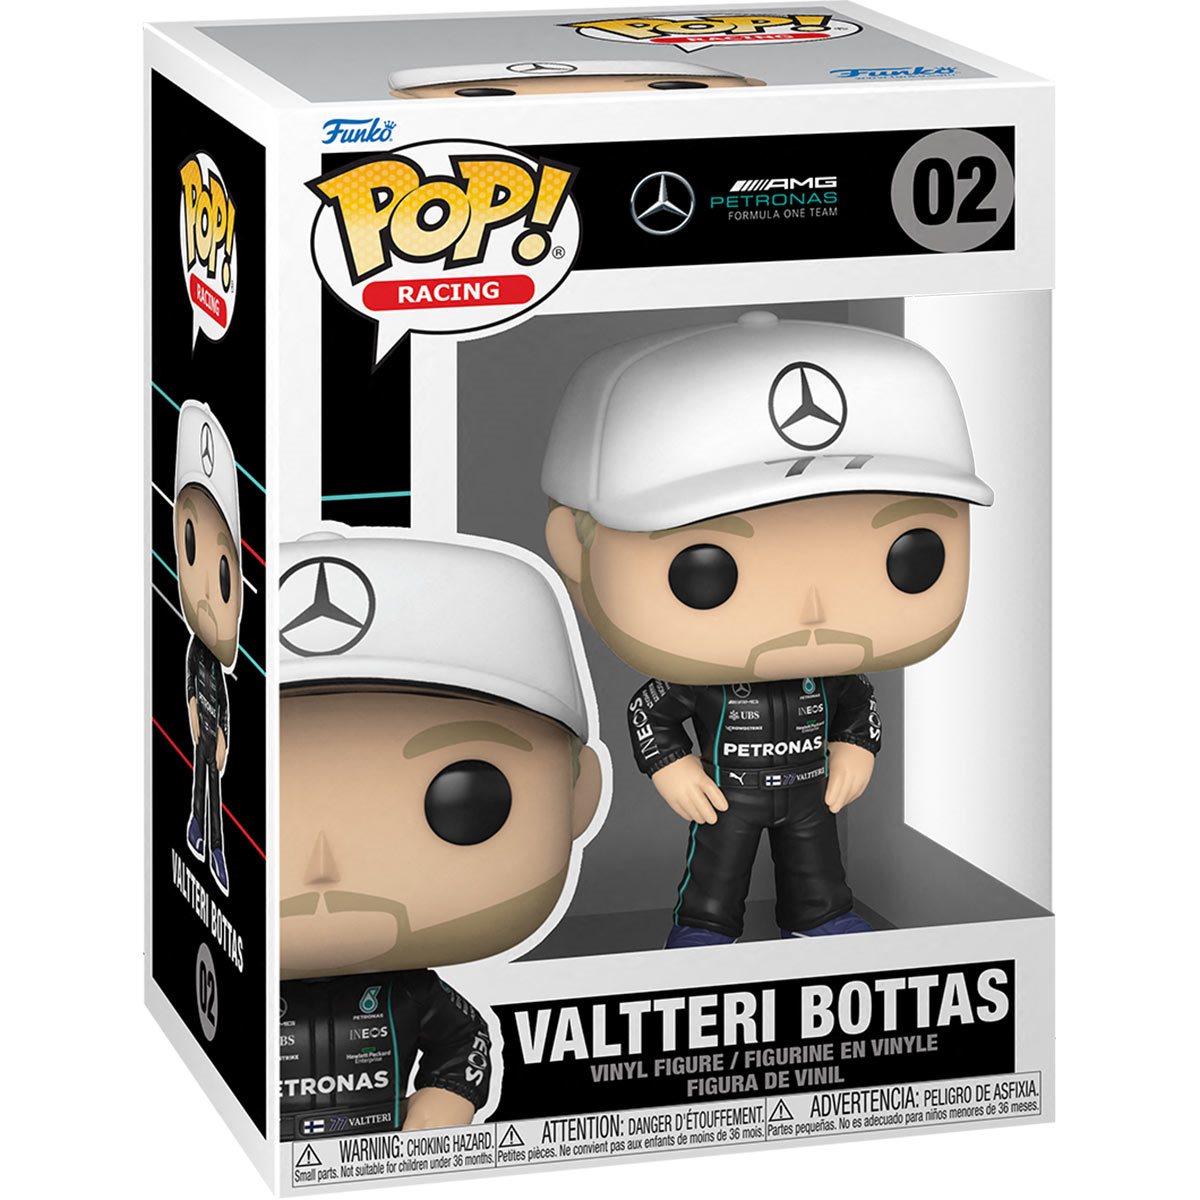 Mercedes-AMG Petronas: Formula One Team - Valtteri Bottas Pop! Vinyl Figure (02)